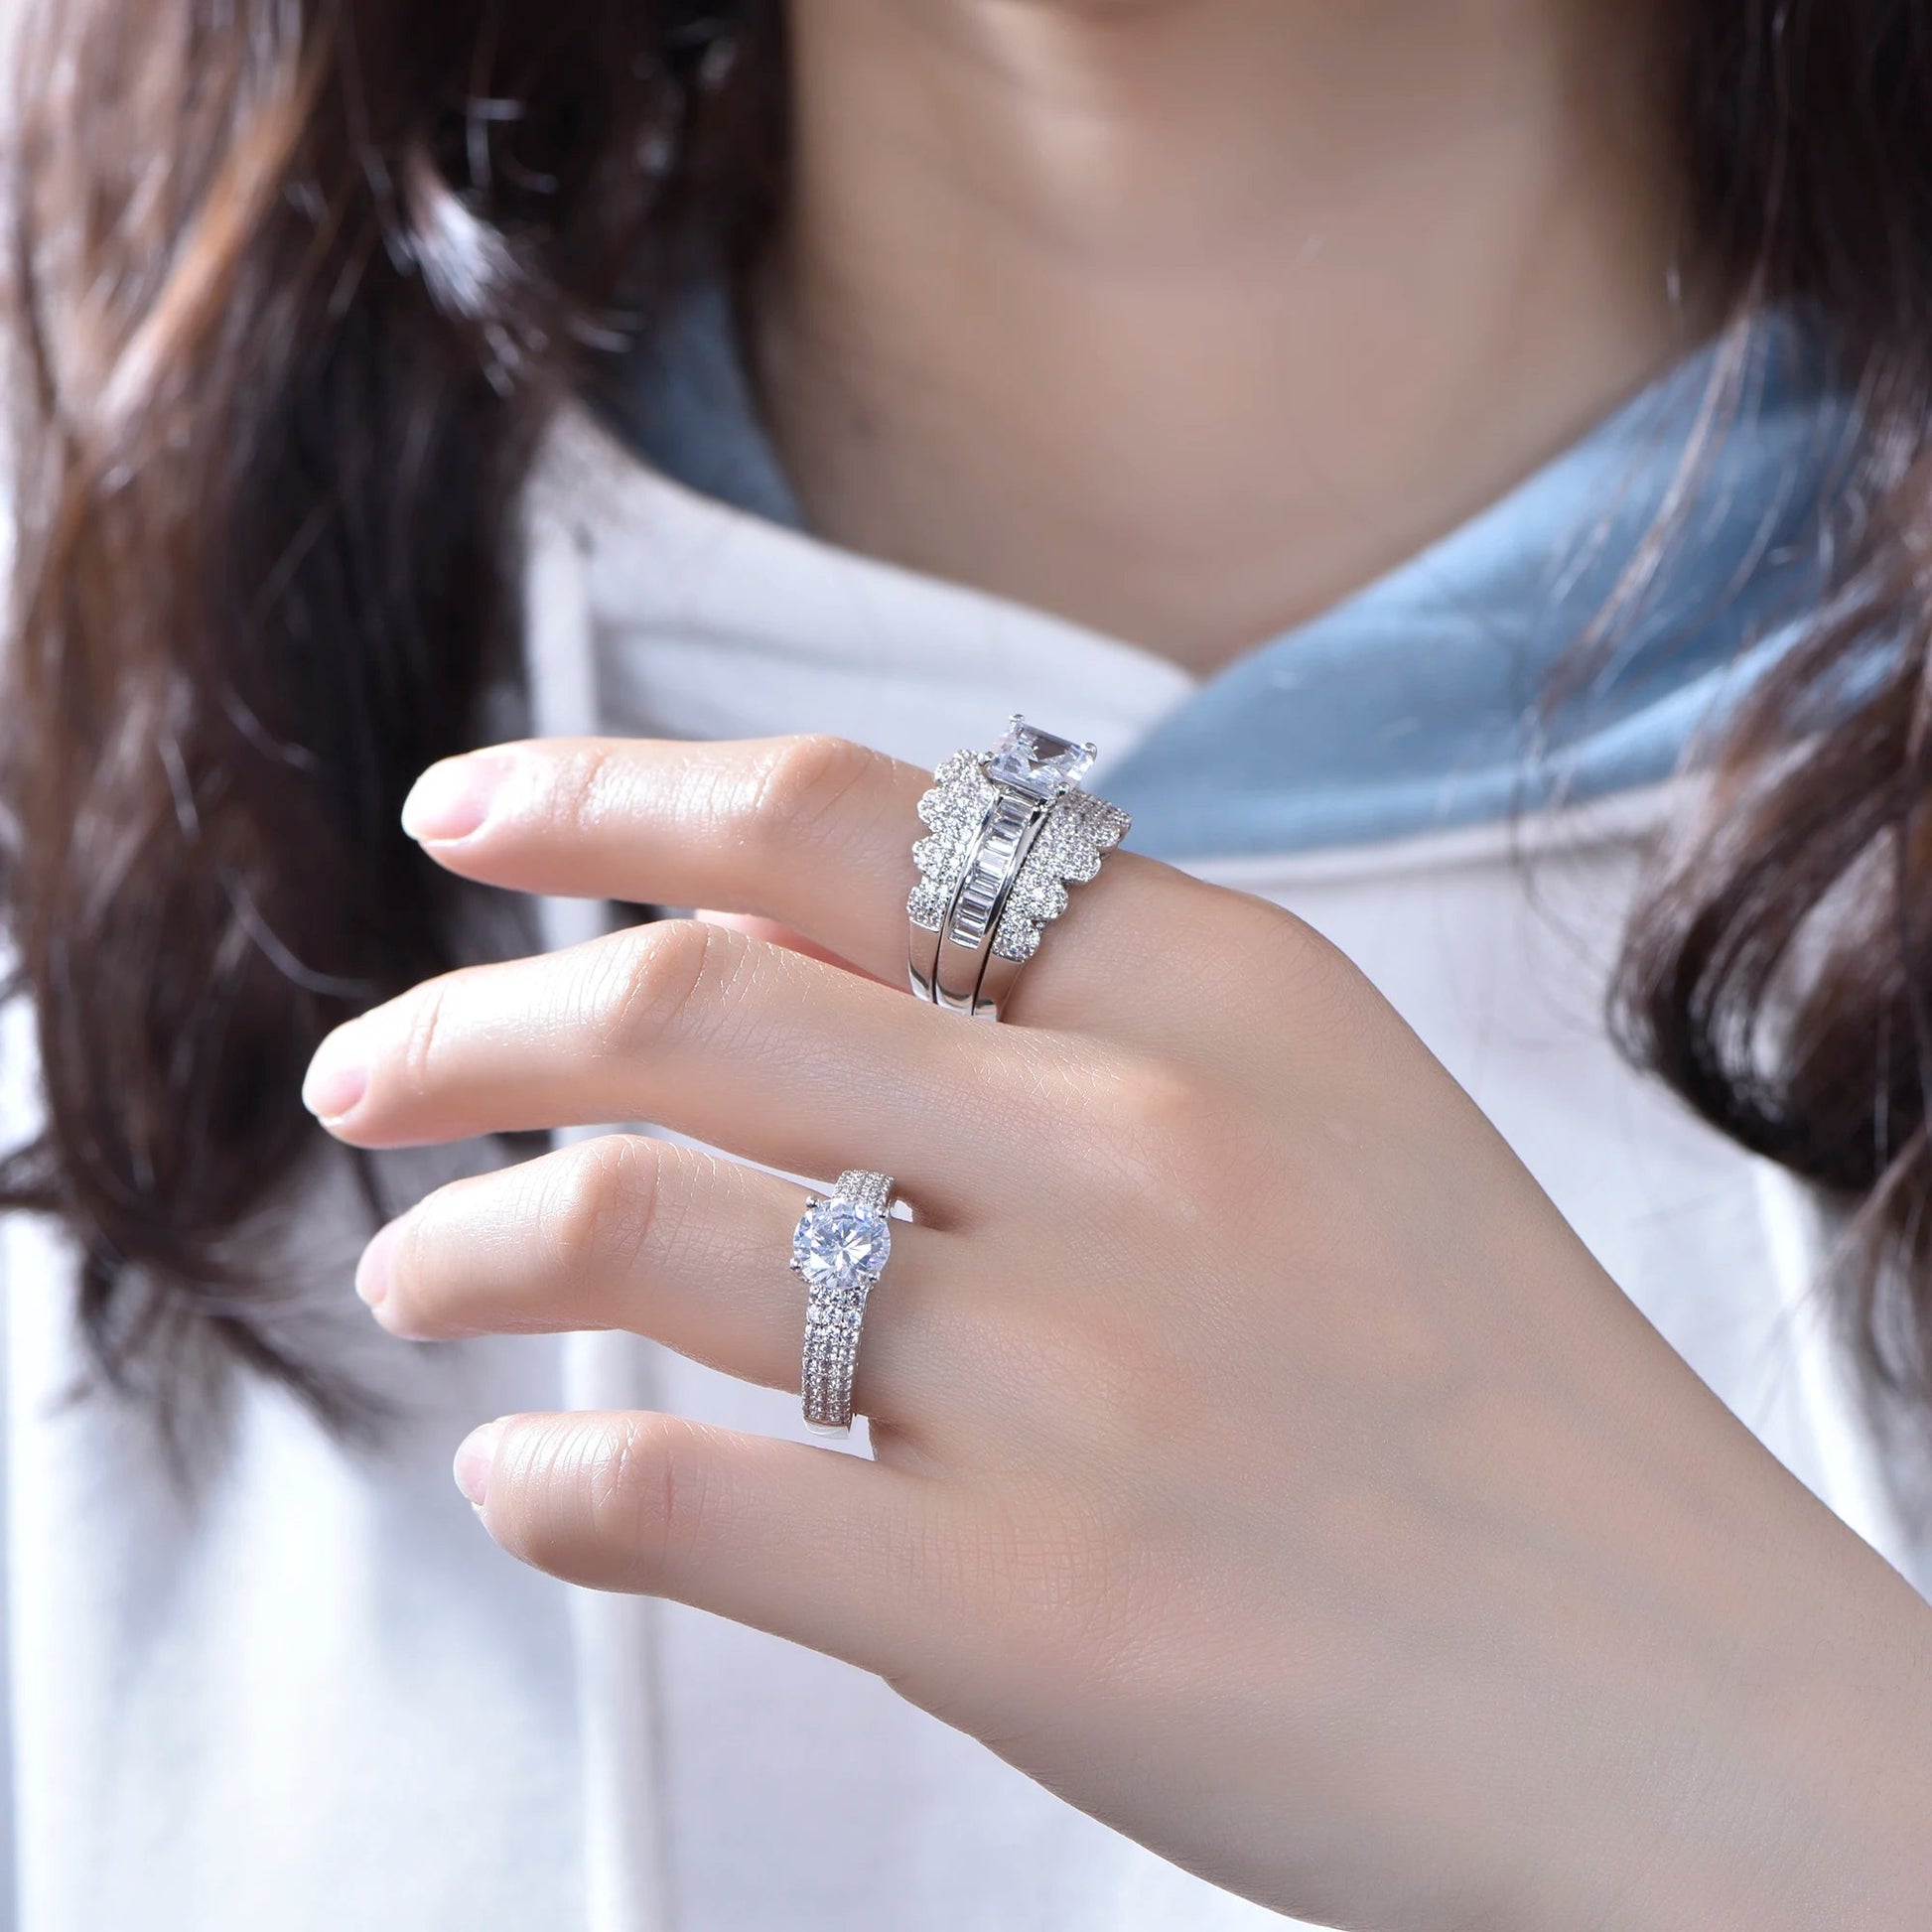 wholesale Fashion jewelry rings Sterling Silver Rings Diamond Wedding Jewelry 925 Sterling Silver Ring For Women Wedding Kirin Jewelry